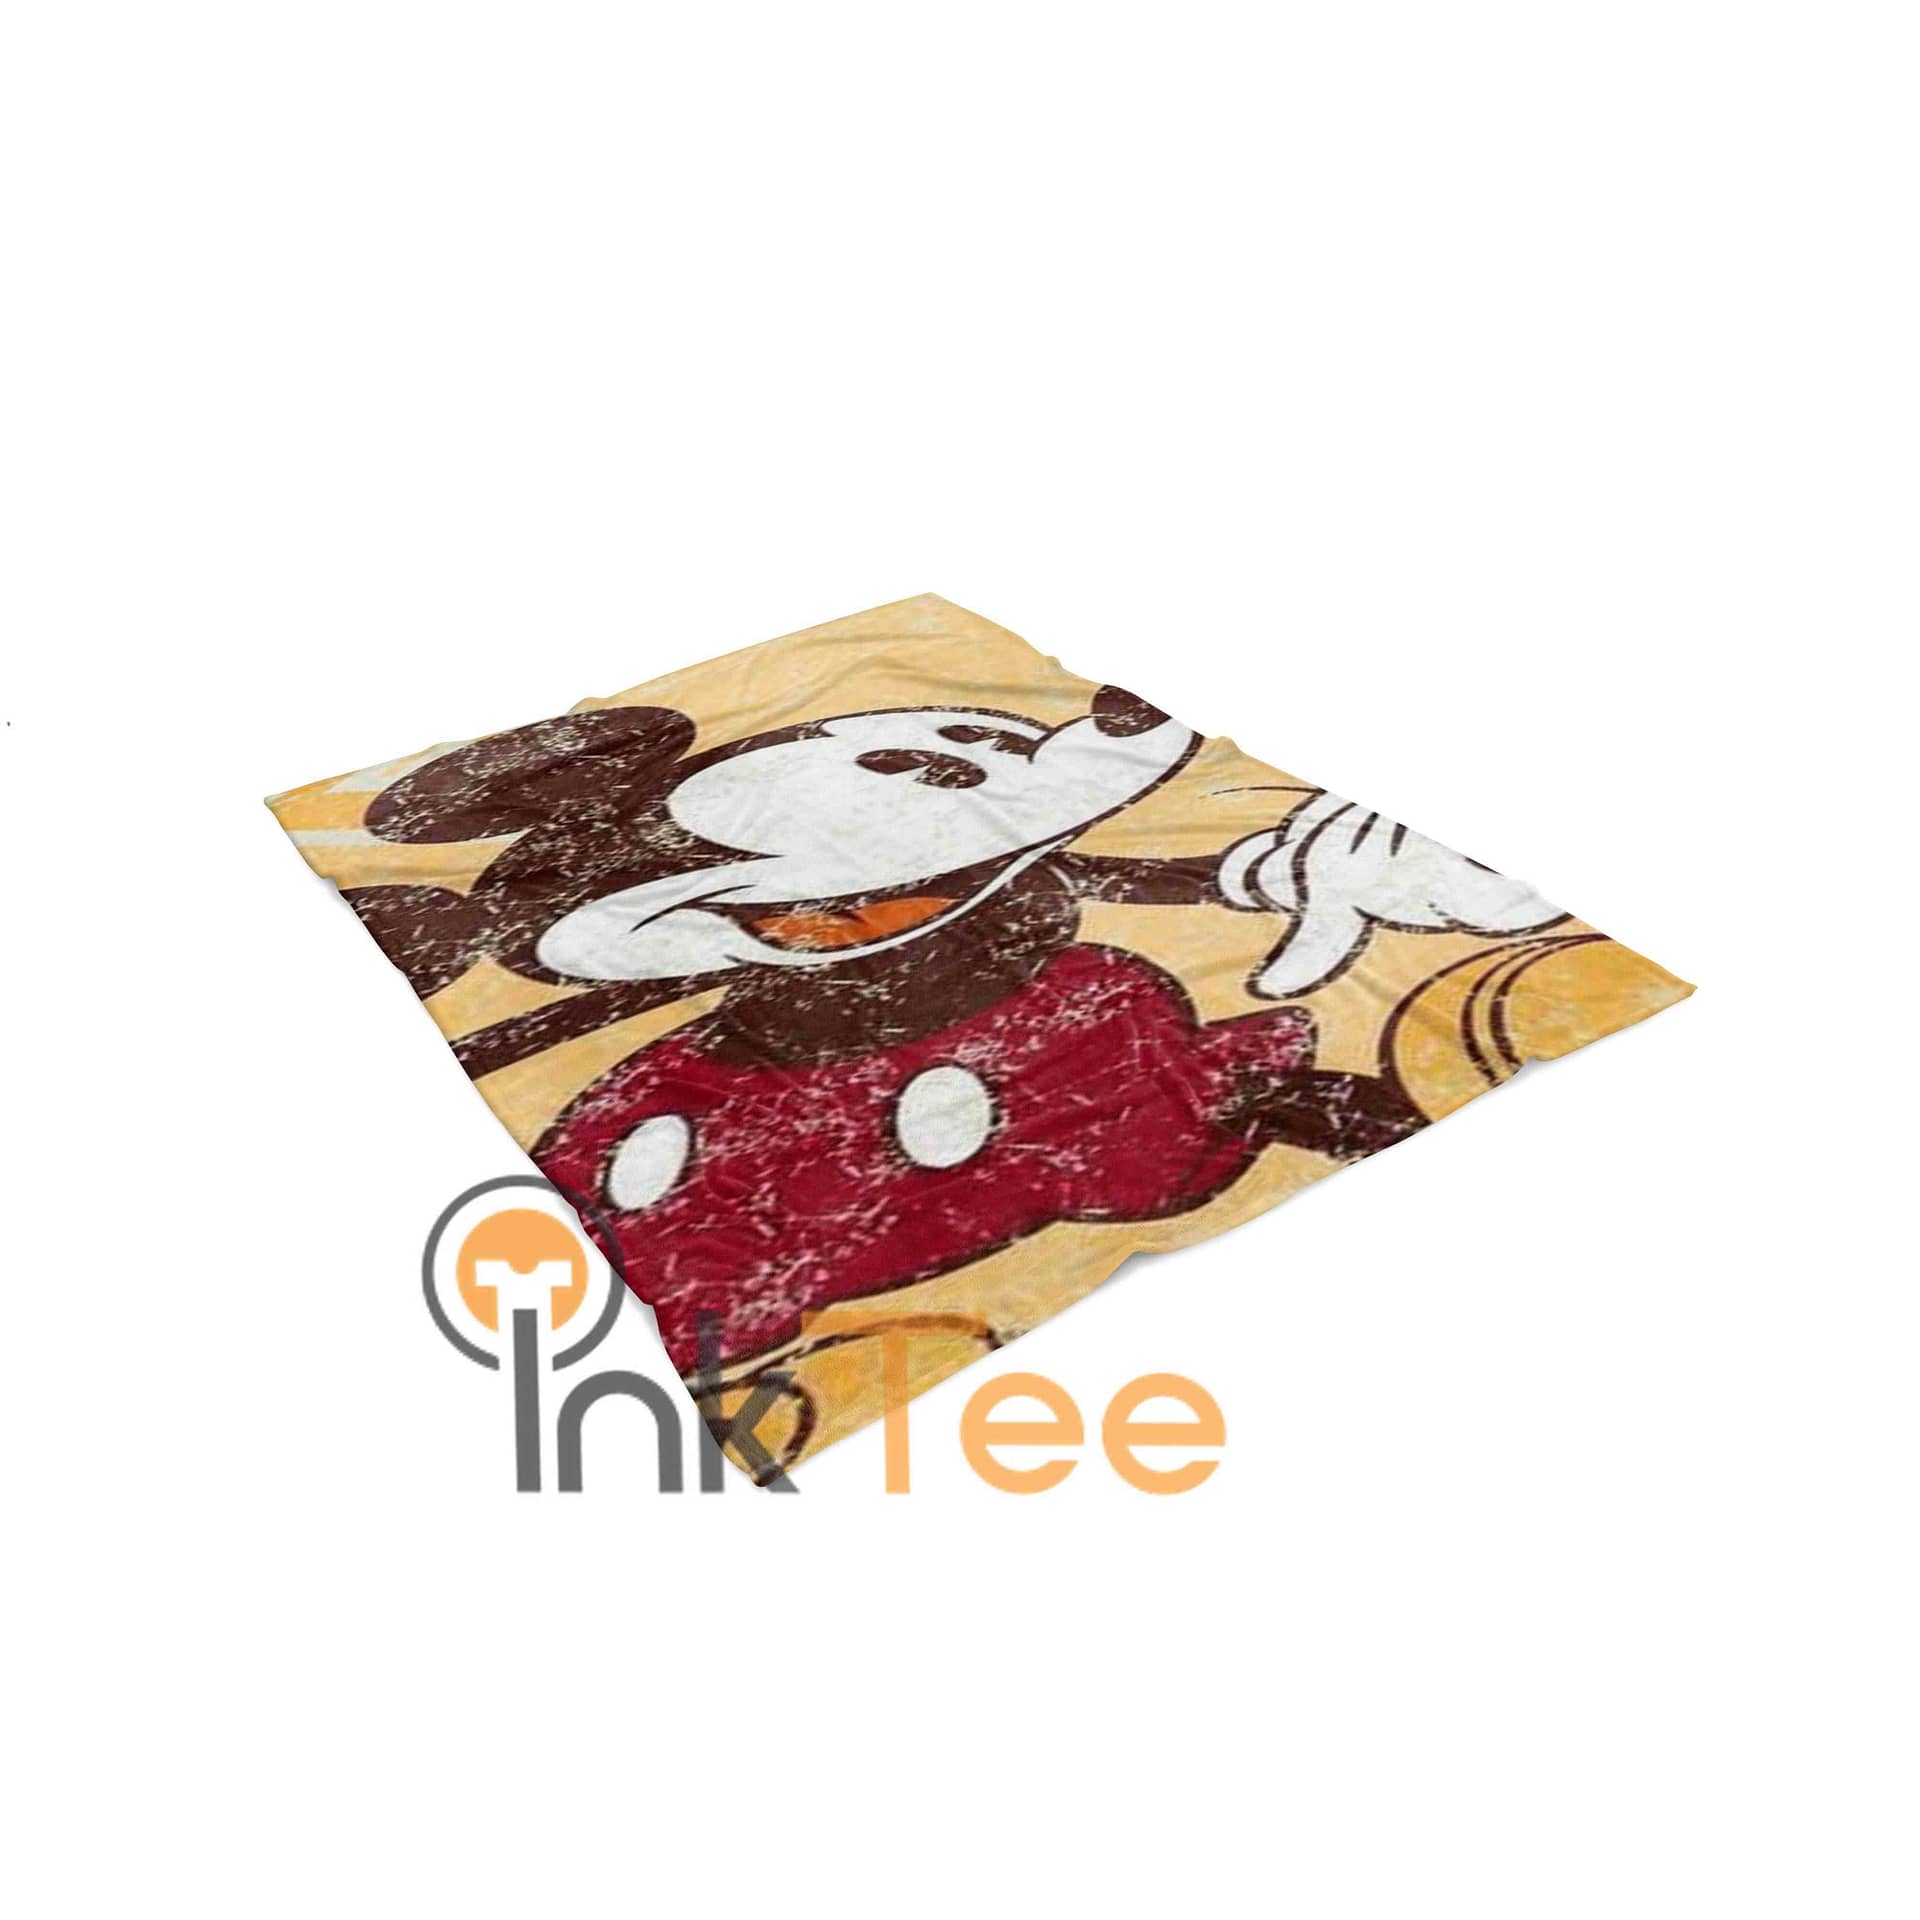 Inktee Store - Mickey Mouse Limited Edition Amazon Best Seller Sku 4088 Fleece Blanket Image